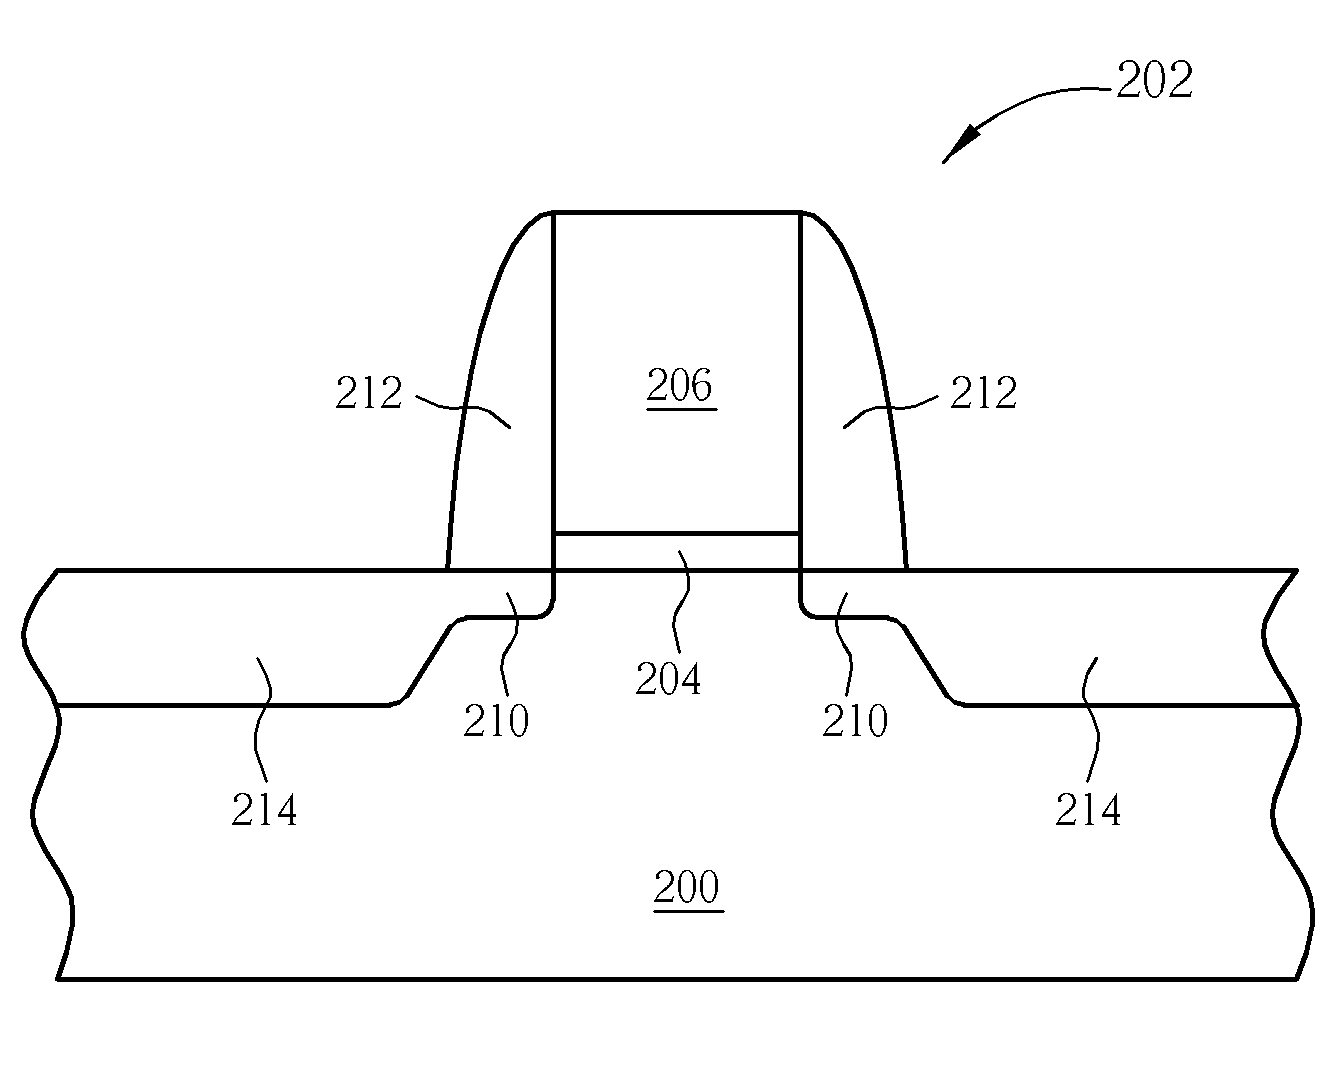 Method for fabricating metal-oxide semiconductor transistors